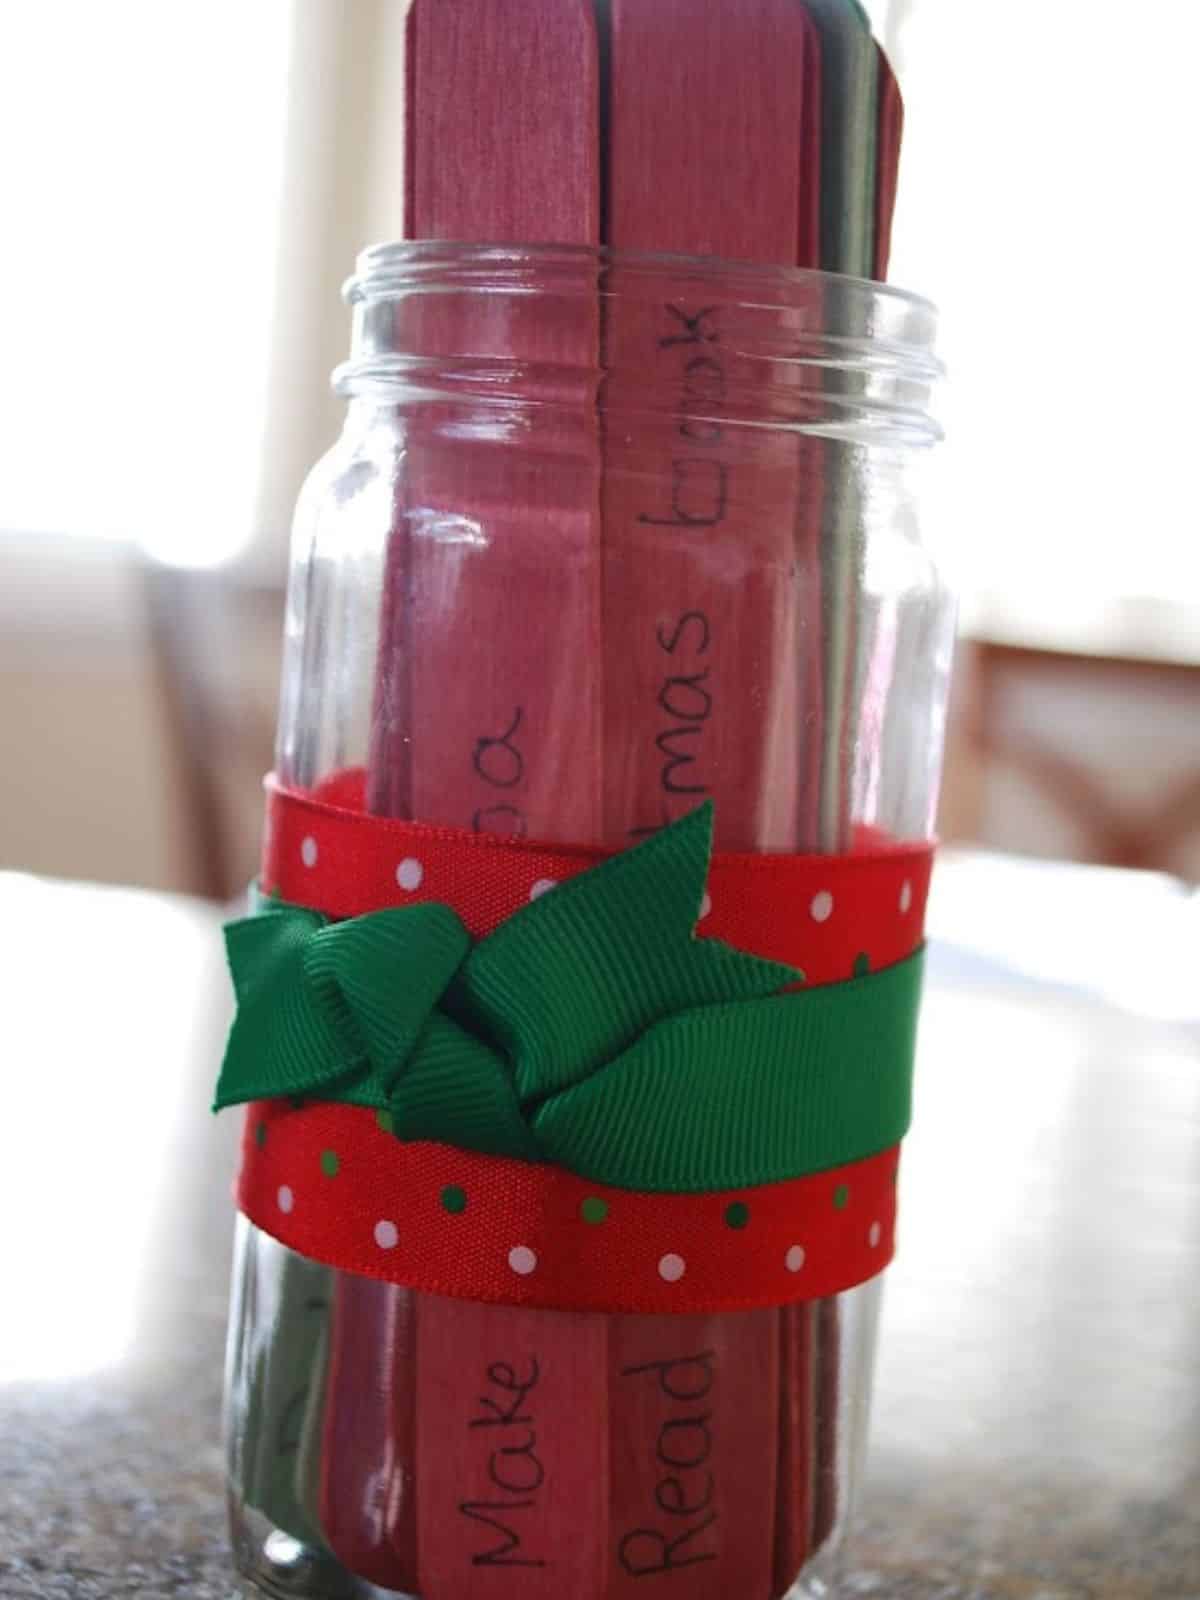 popsicle sticks in a jar.